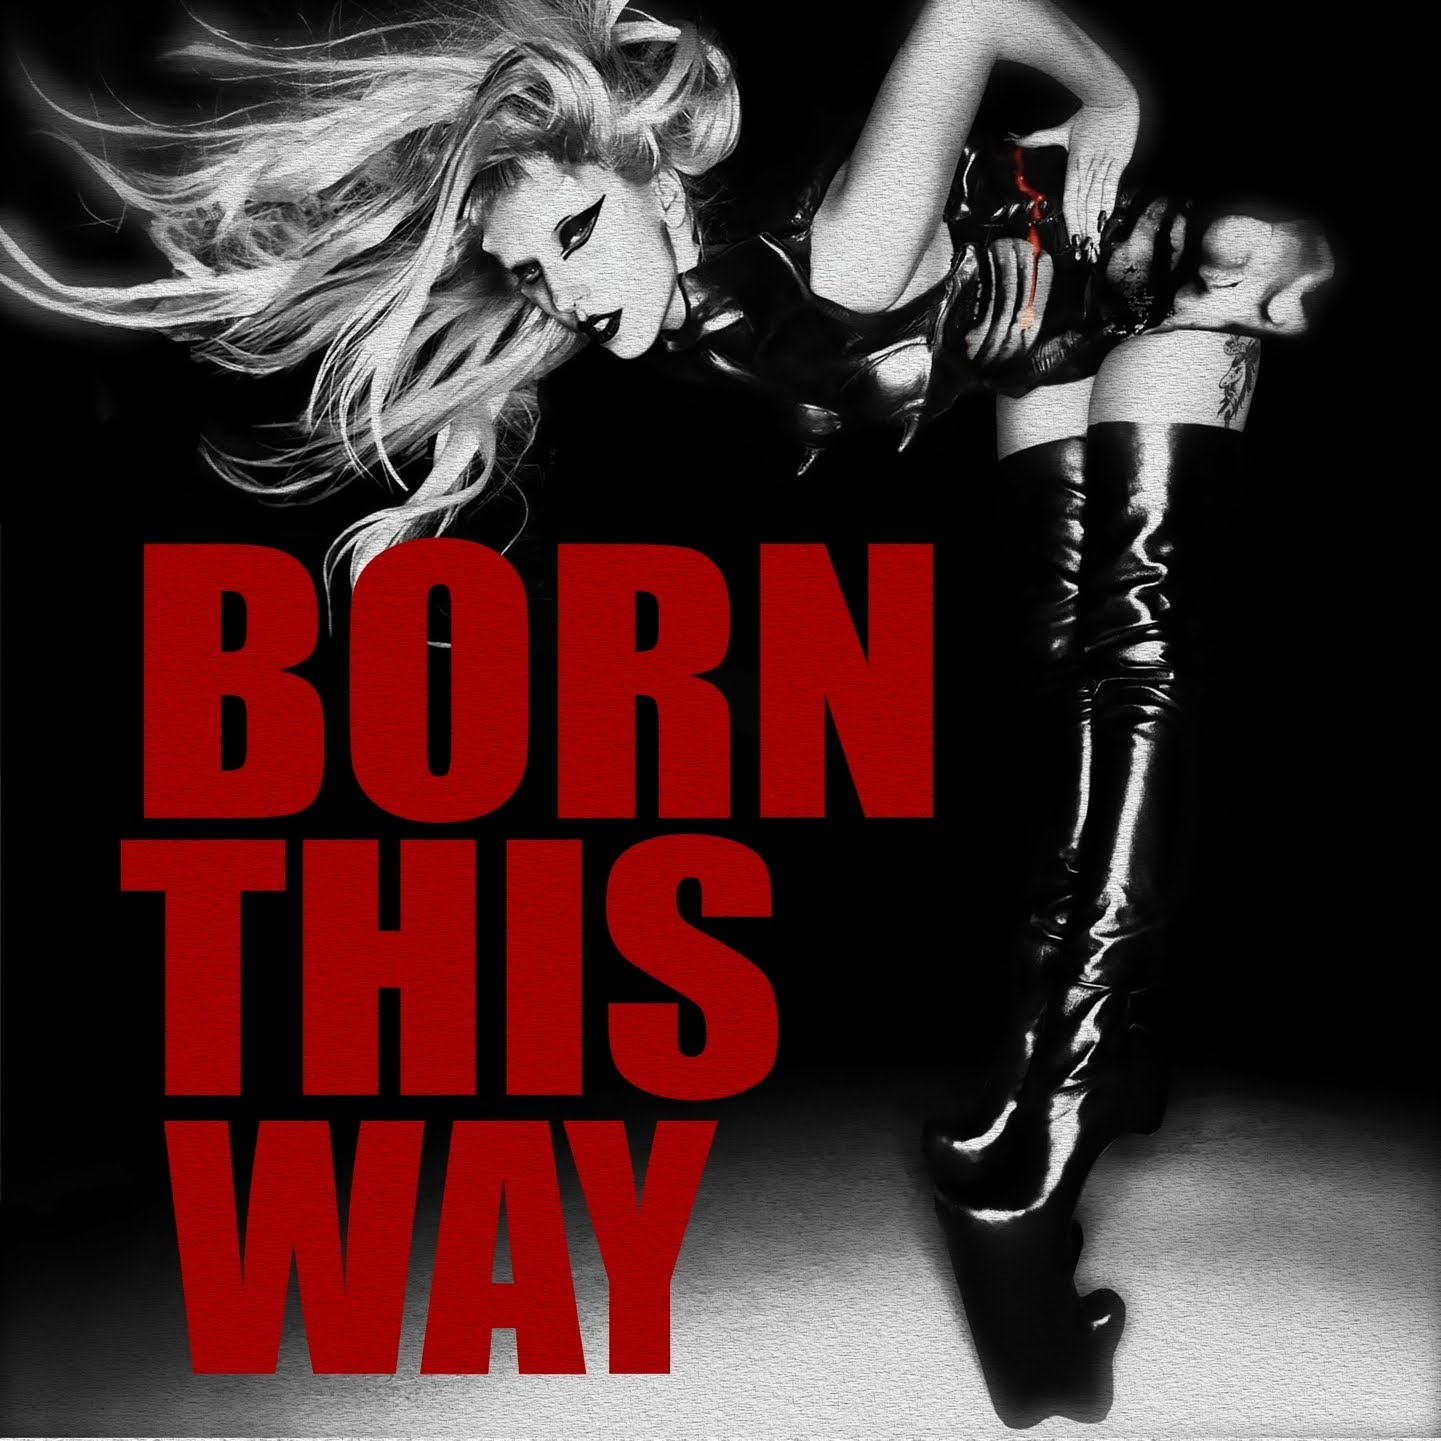 Lady gaga born this. Леди Гага Борн ЗИС Вэй. Леди Гага обложка альбома 2011. Lady Gaga "born this way, CD". Born this way Lady Gaga альбом.